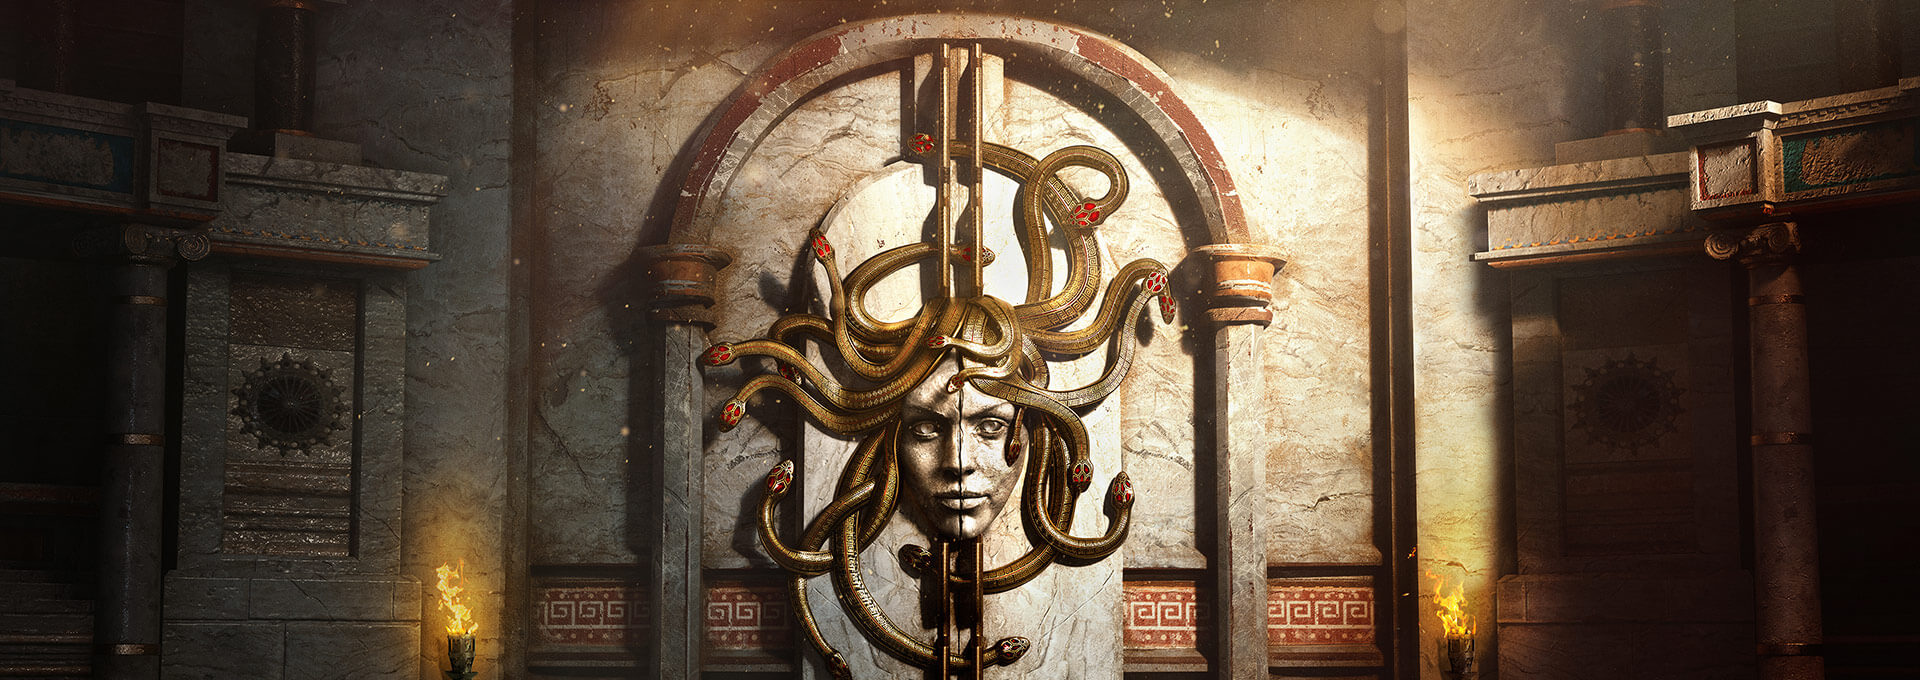 Beyond Medusa's Gate | London | VR Escape Game  London